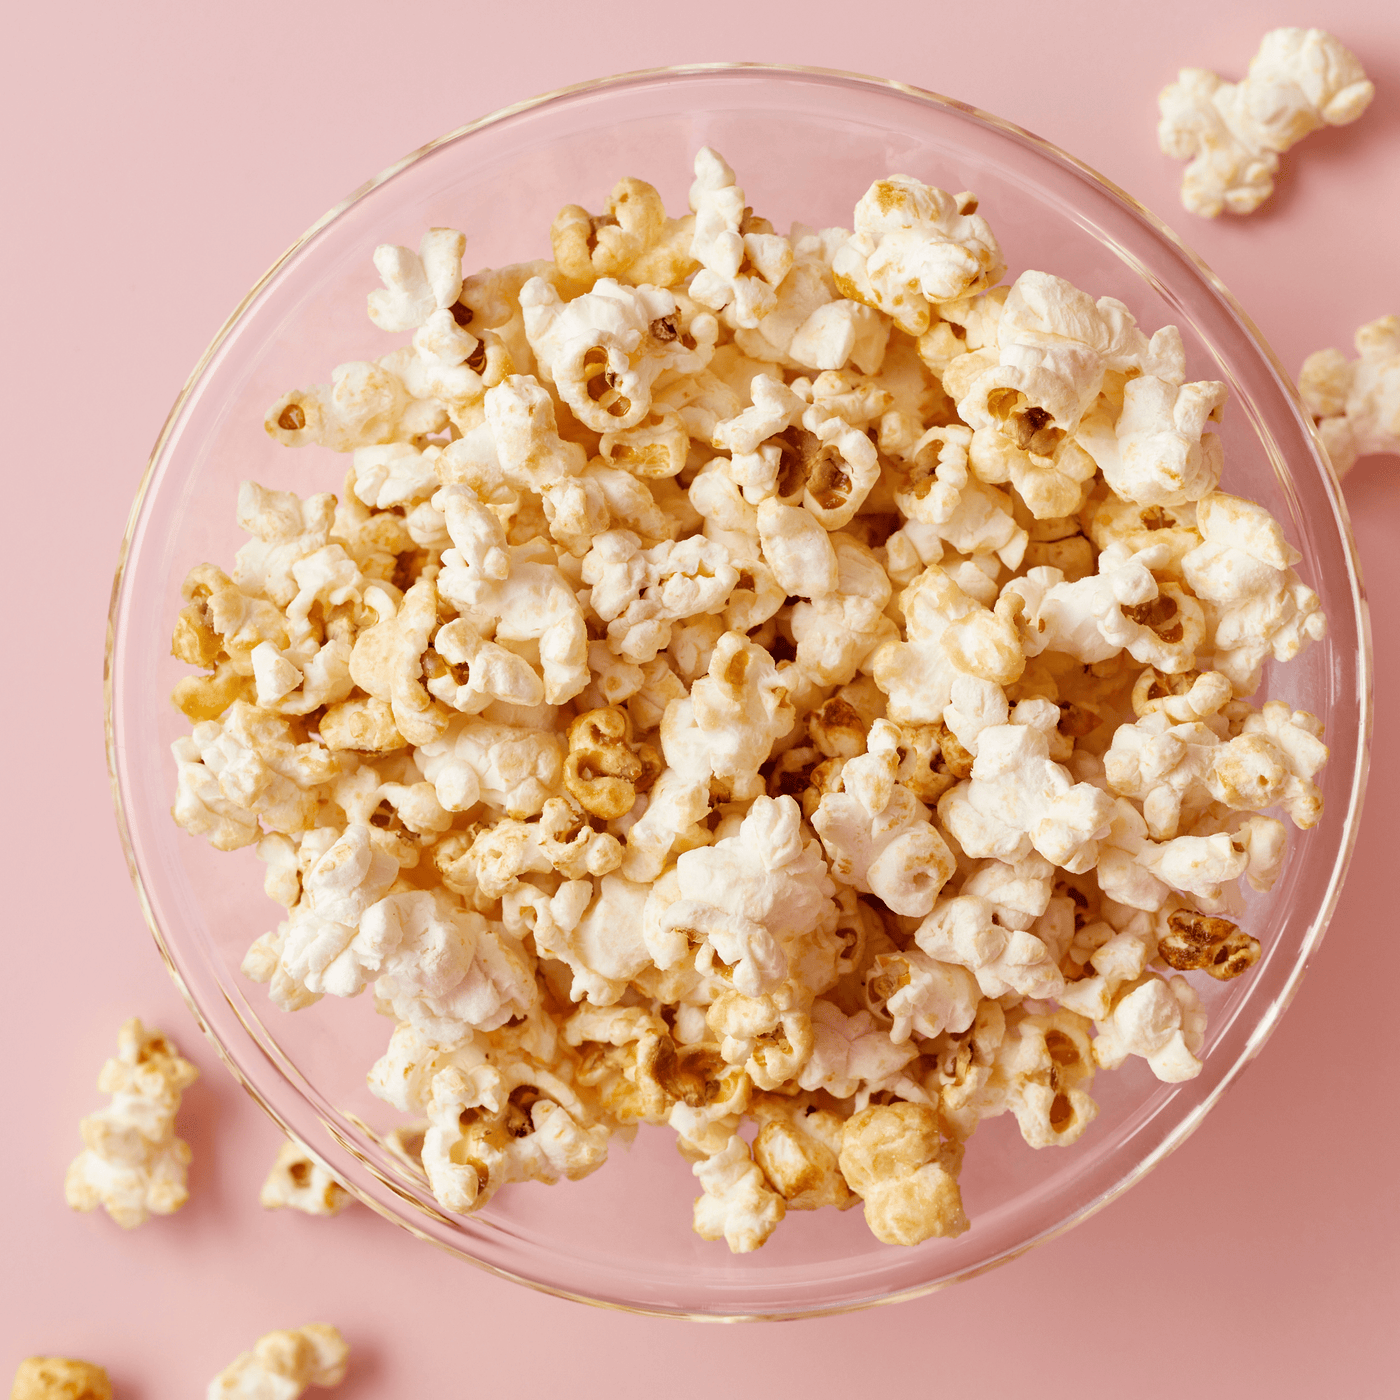 Bio Popcorn Salted Caramel Style